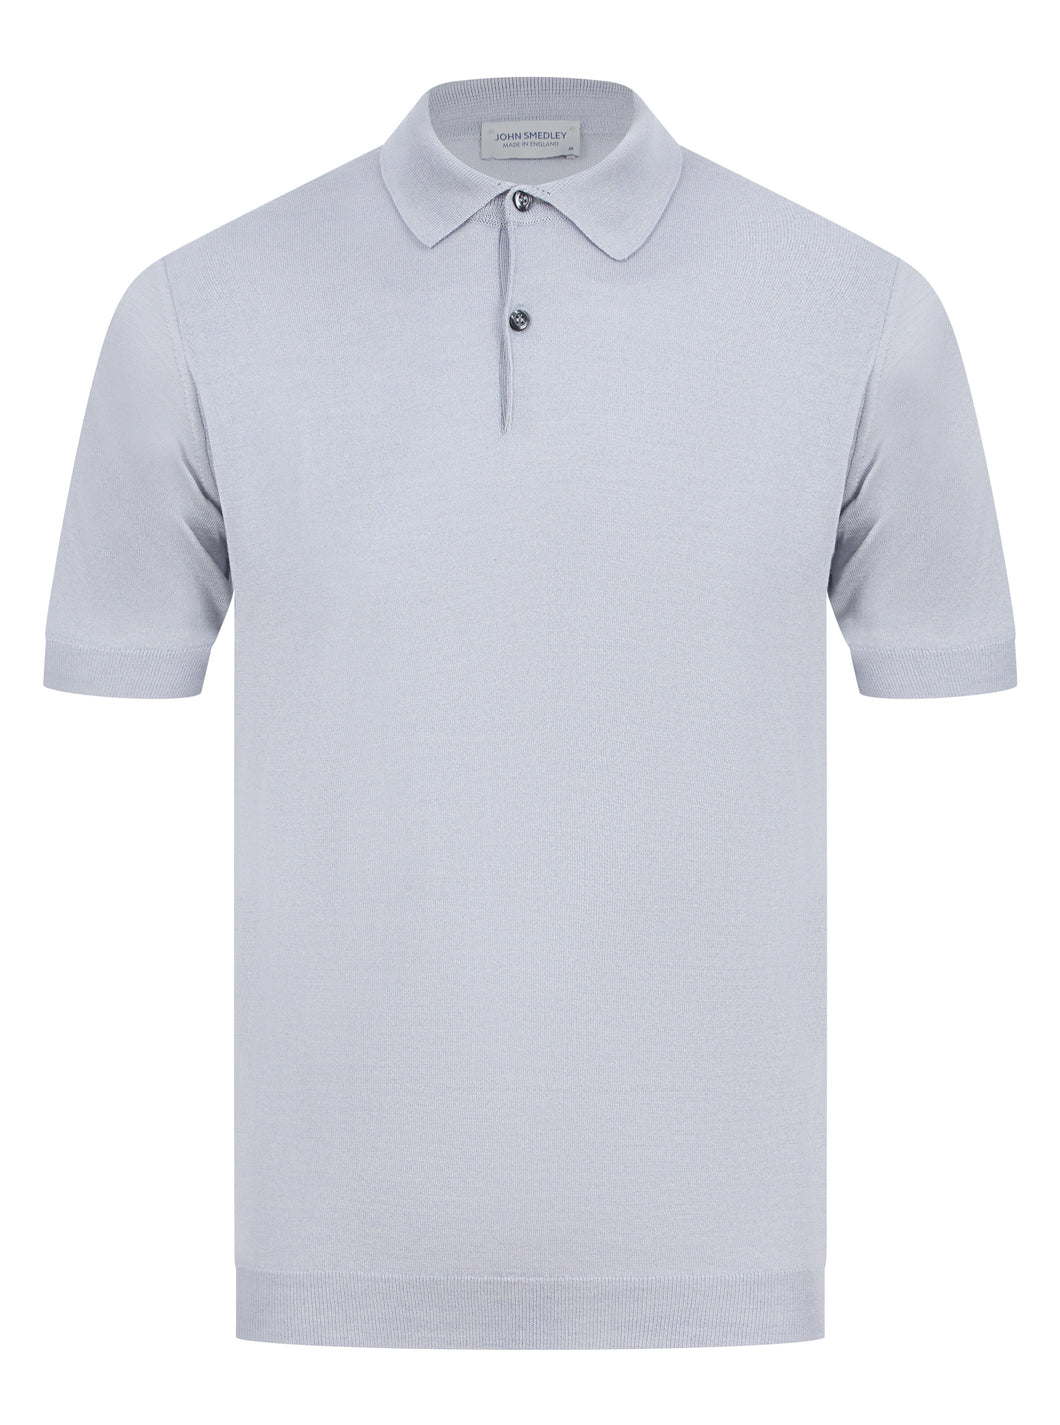 John Smedley CPayton Polo Shirt Pebble Grey